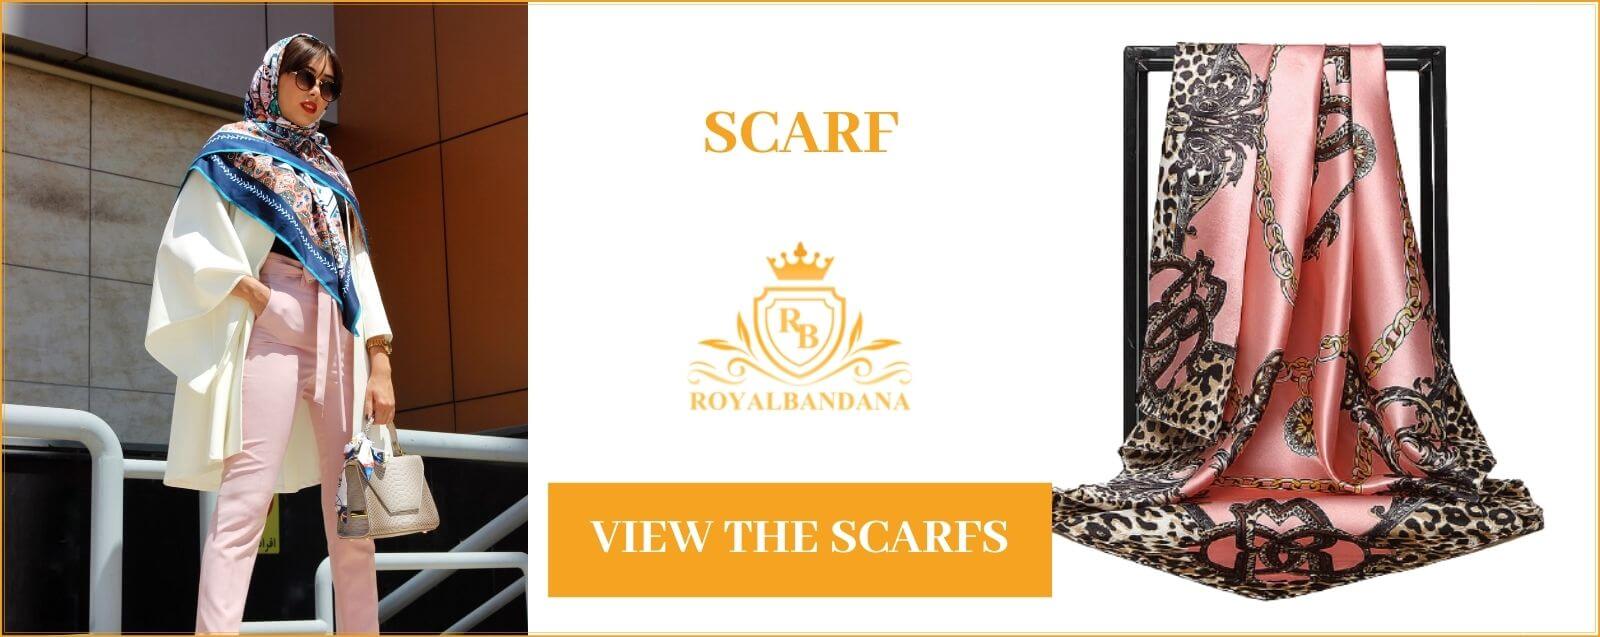 scarf collection royalbandana buy